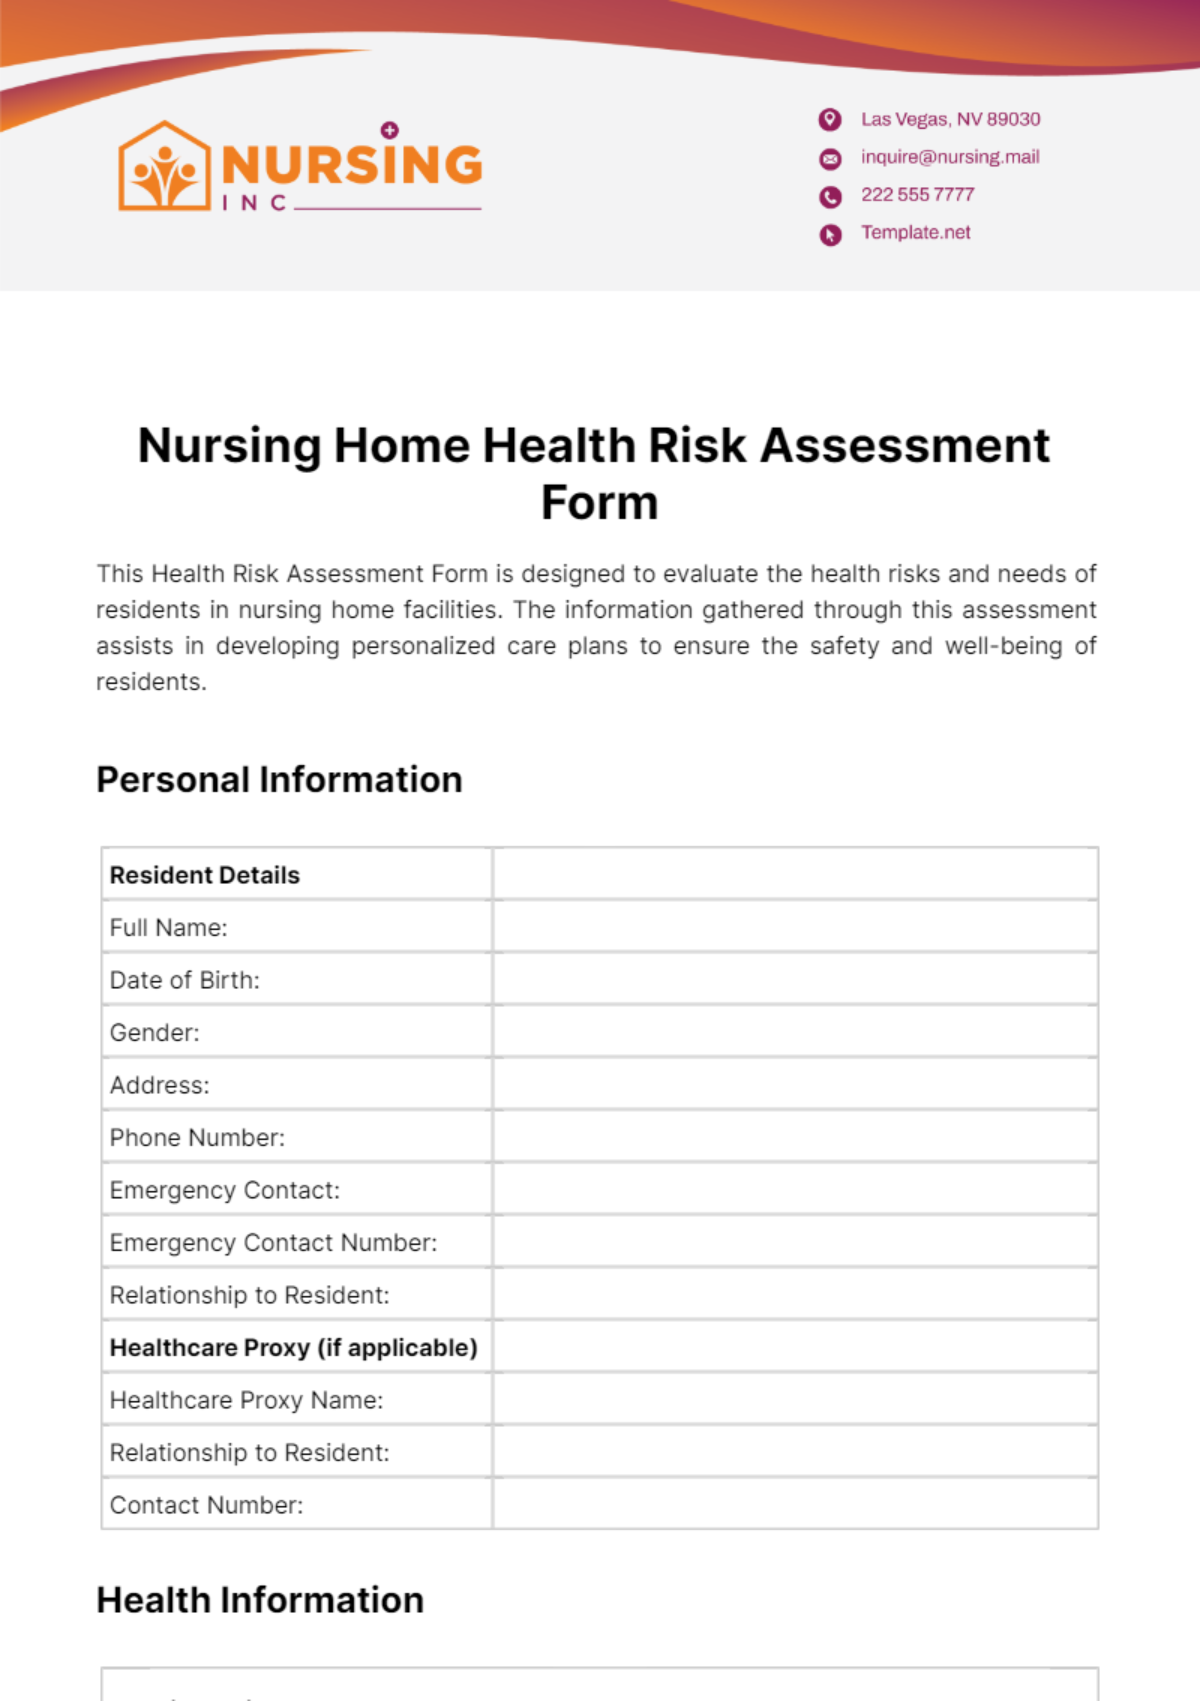 Nursing Home Health Risk Assessment Form Template